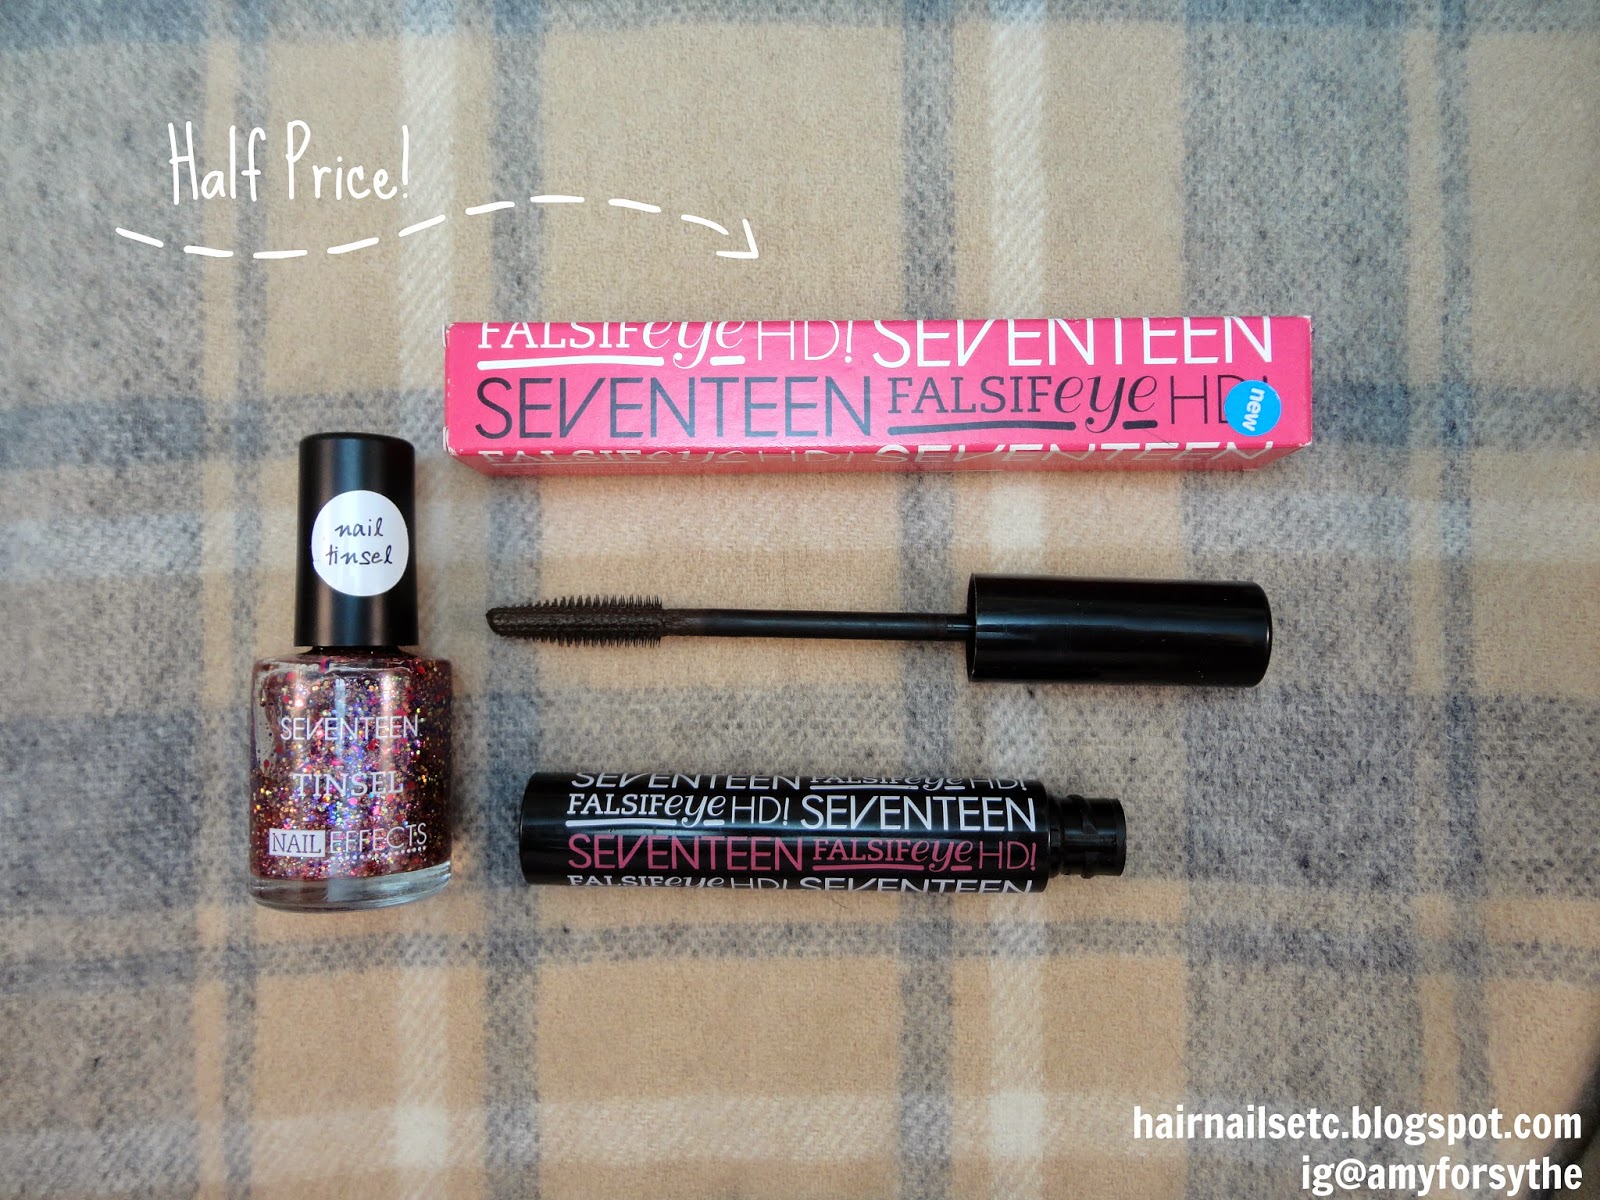 Boots UK Beauty Haul - Seventeen Falsifeye HD mascara, Seventeen Tinsel Pink Nail Polish